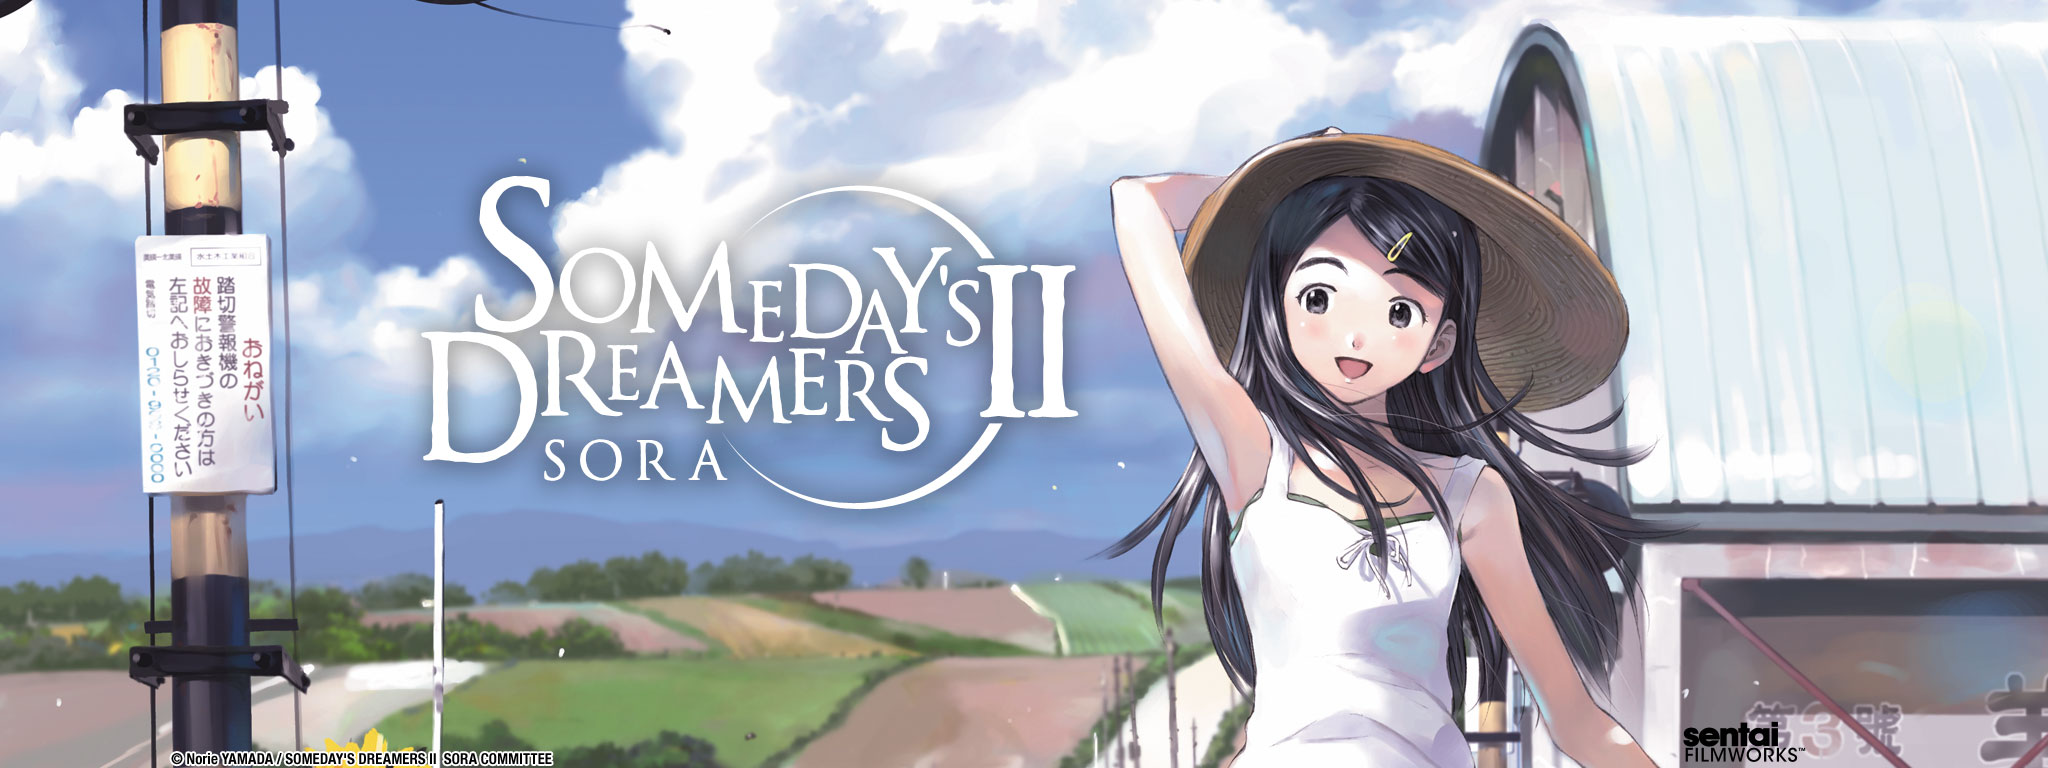 Title Art for Someday's Dreamers II Sora